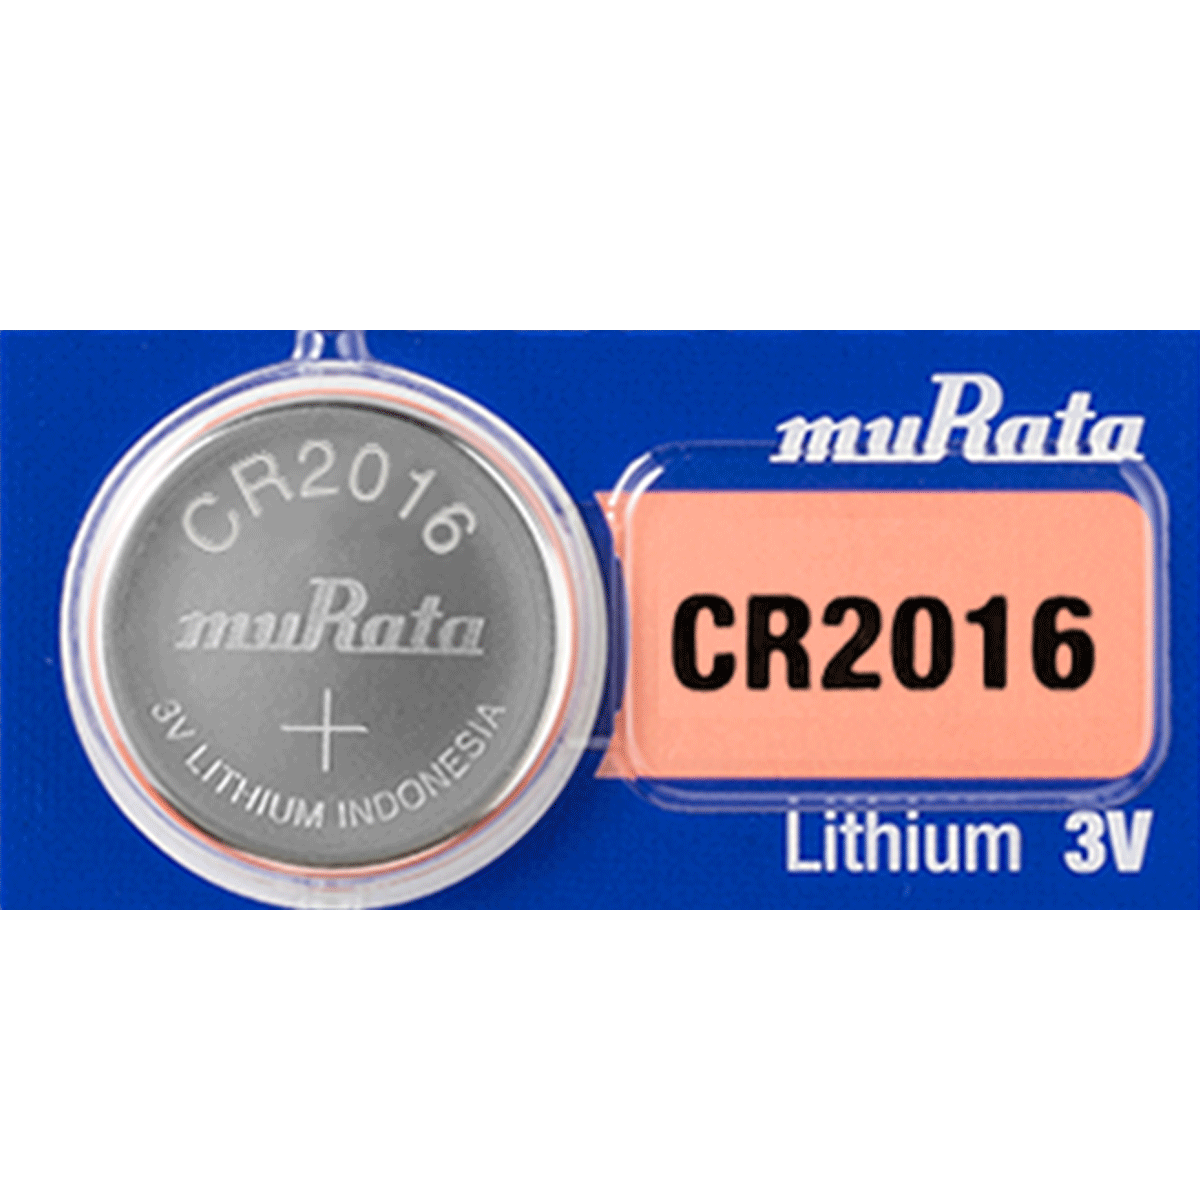 Varta CR1216 Lithium 3.V Watch-Electronic Battery